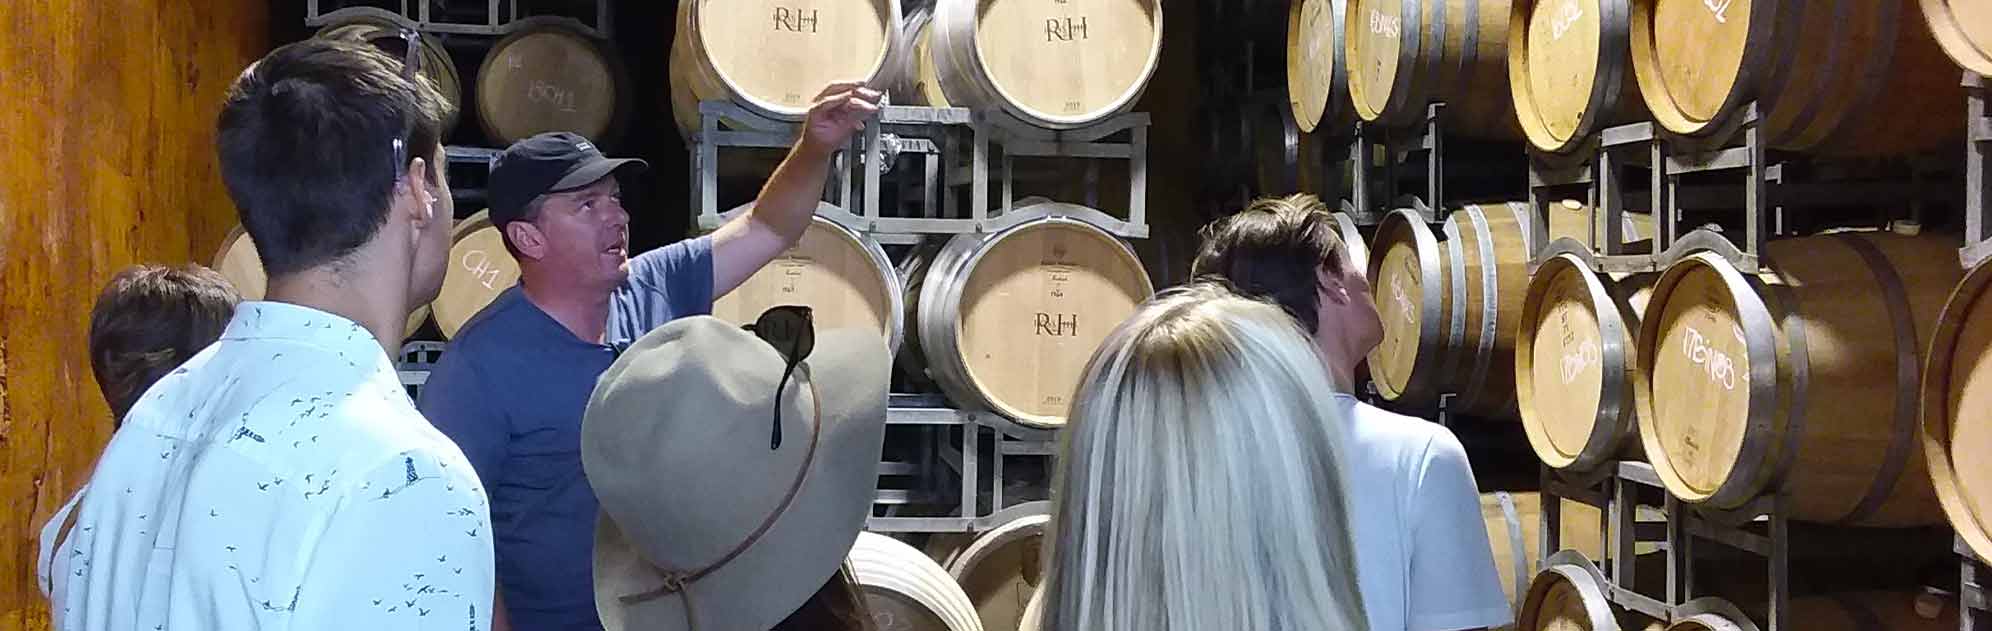 Wine tour barrels